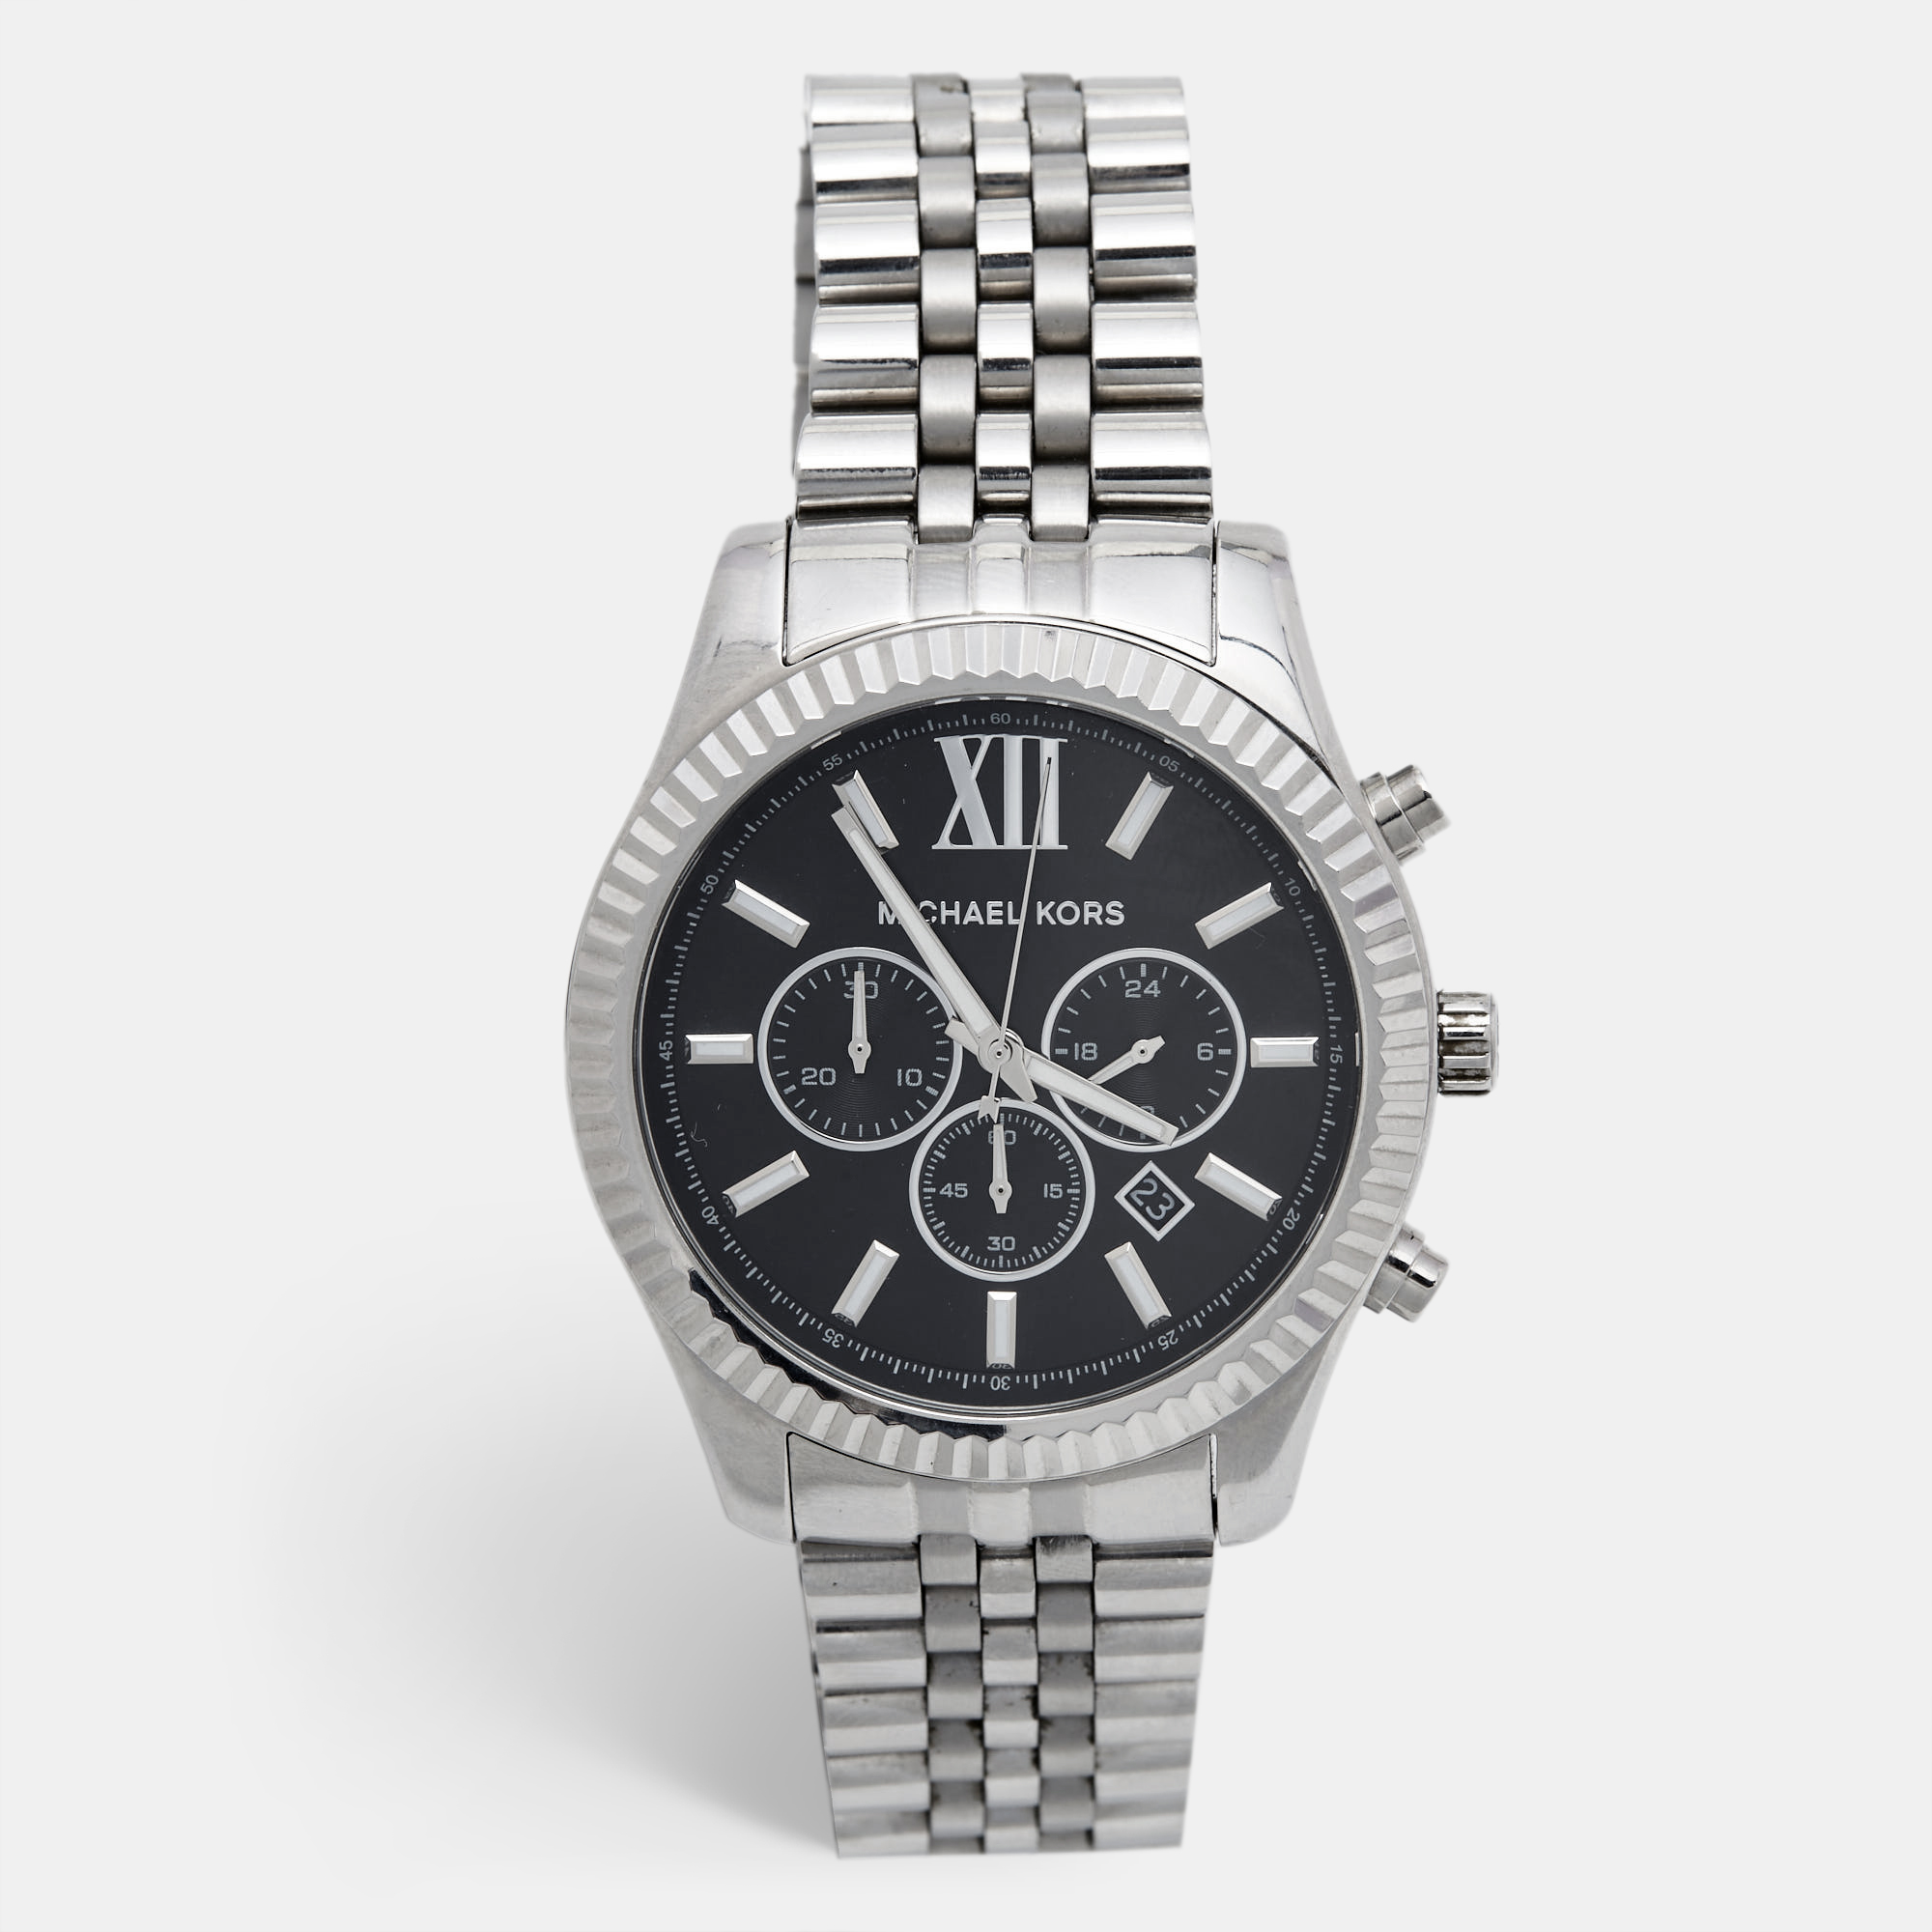 Michael kors black stainless steel lexington mk8602 men's wristwatch 44 mm